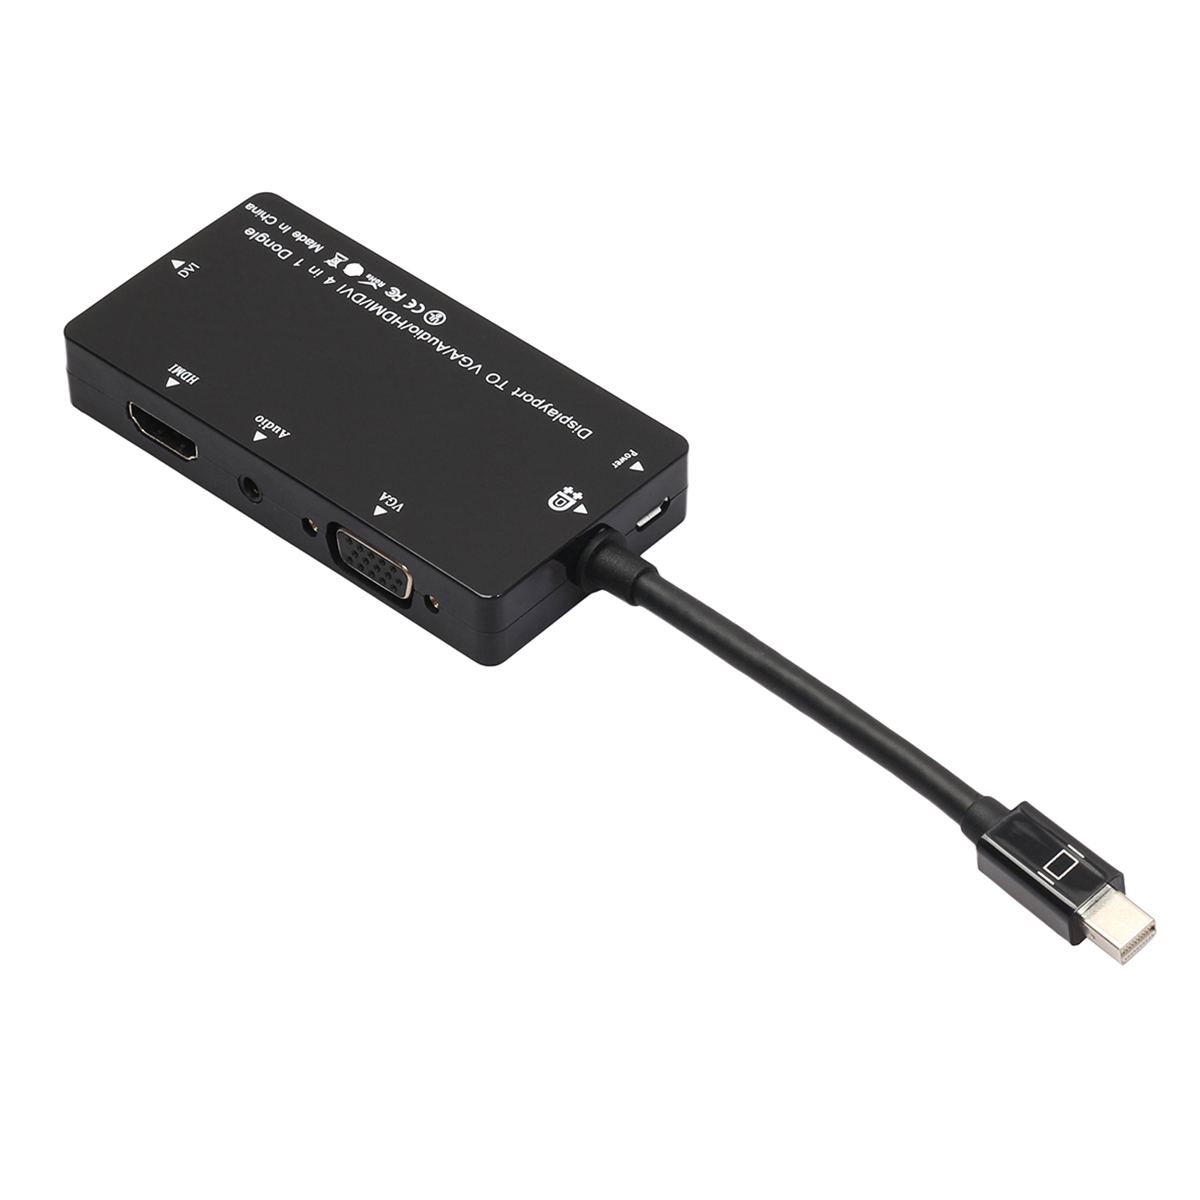 Mini DP Adapter 4 in 1 Mini Display Port to HDMI/DVI/VGA/Audio Converter - Black